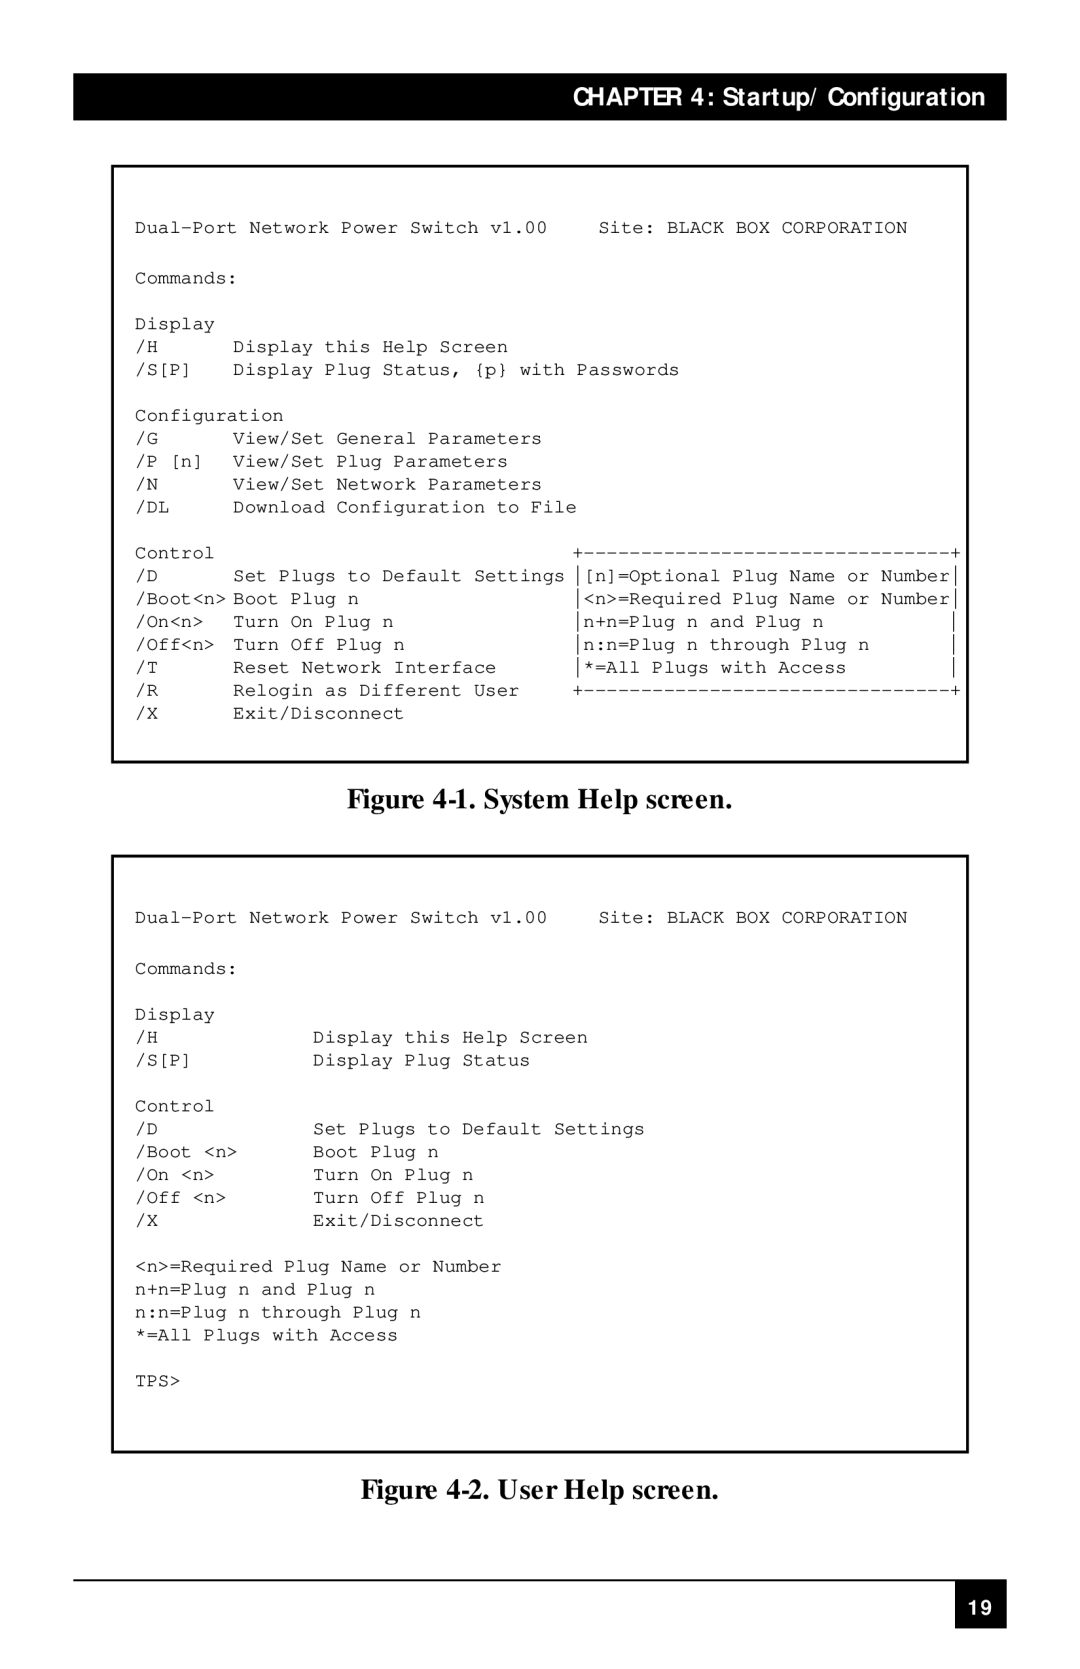 Black Box SWI081AE, SWI082 manual 1.System Help screen, 2.User Help screen, Startup/Configuration 